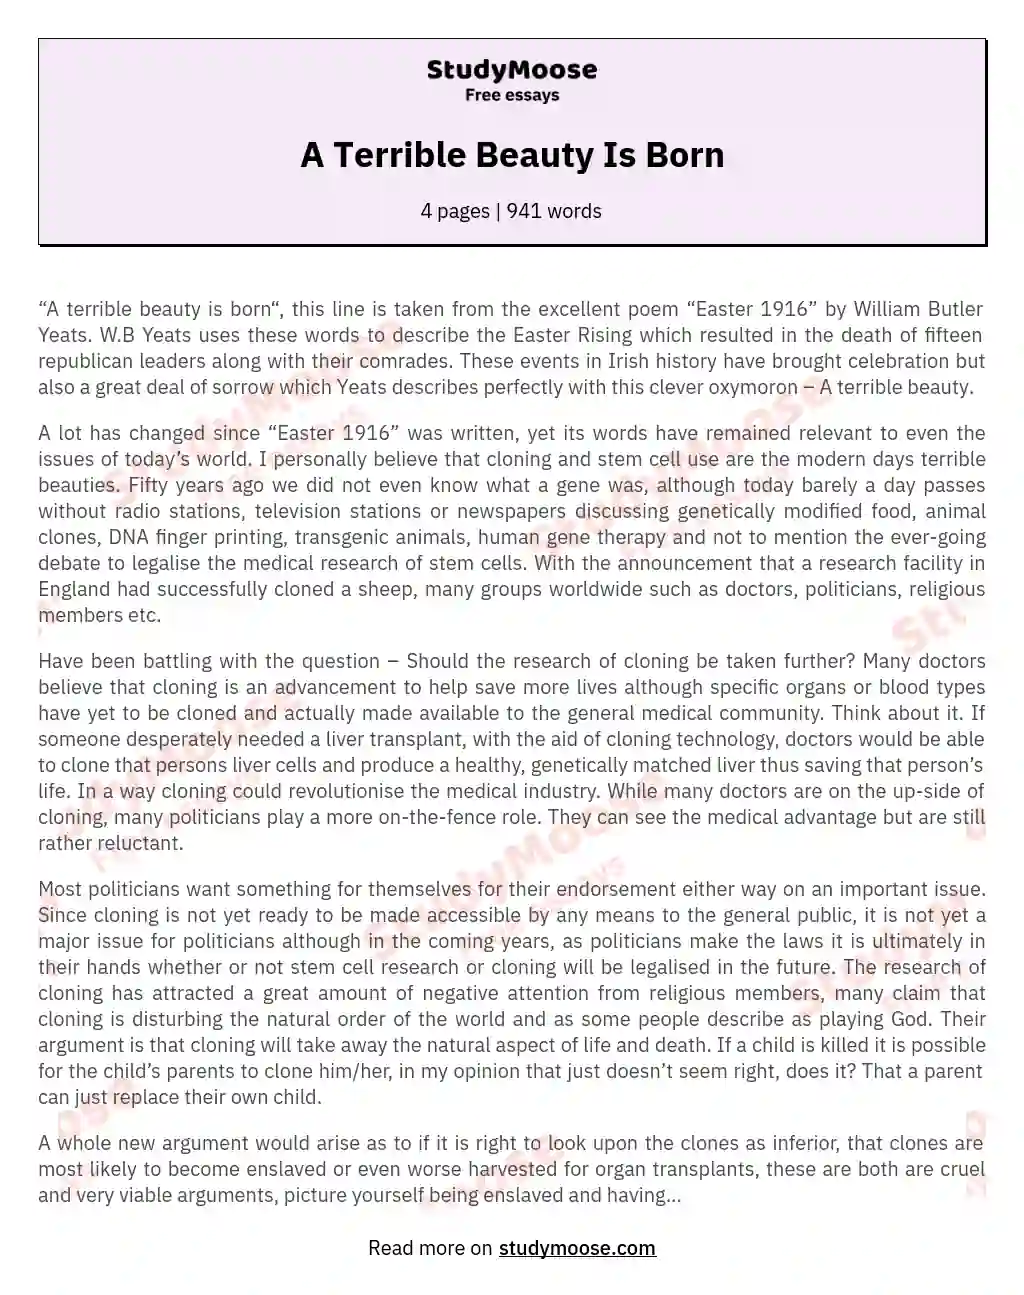 A Terrible Beauty Is Born essay